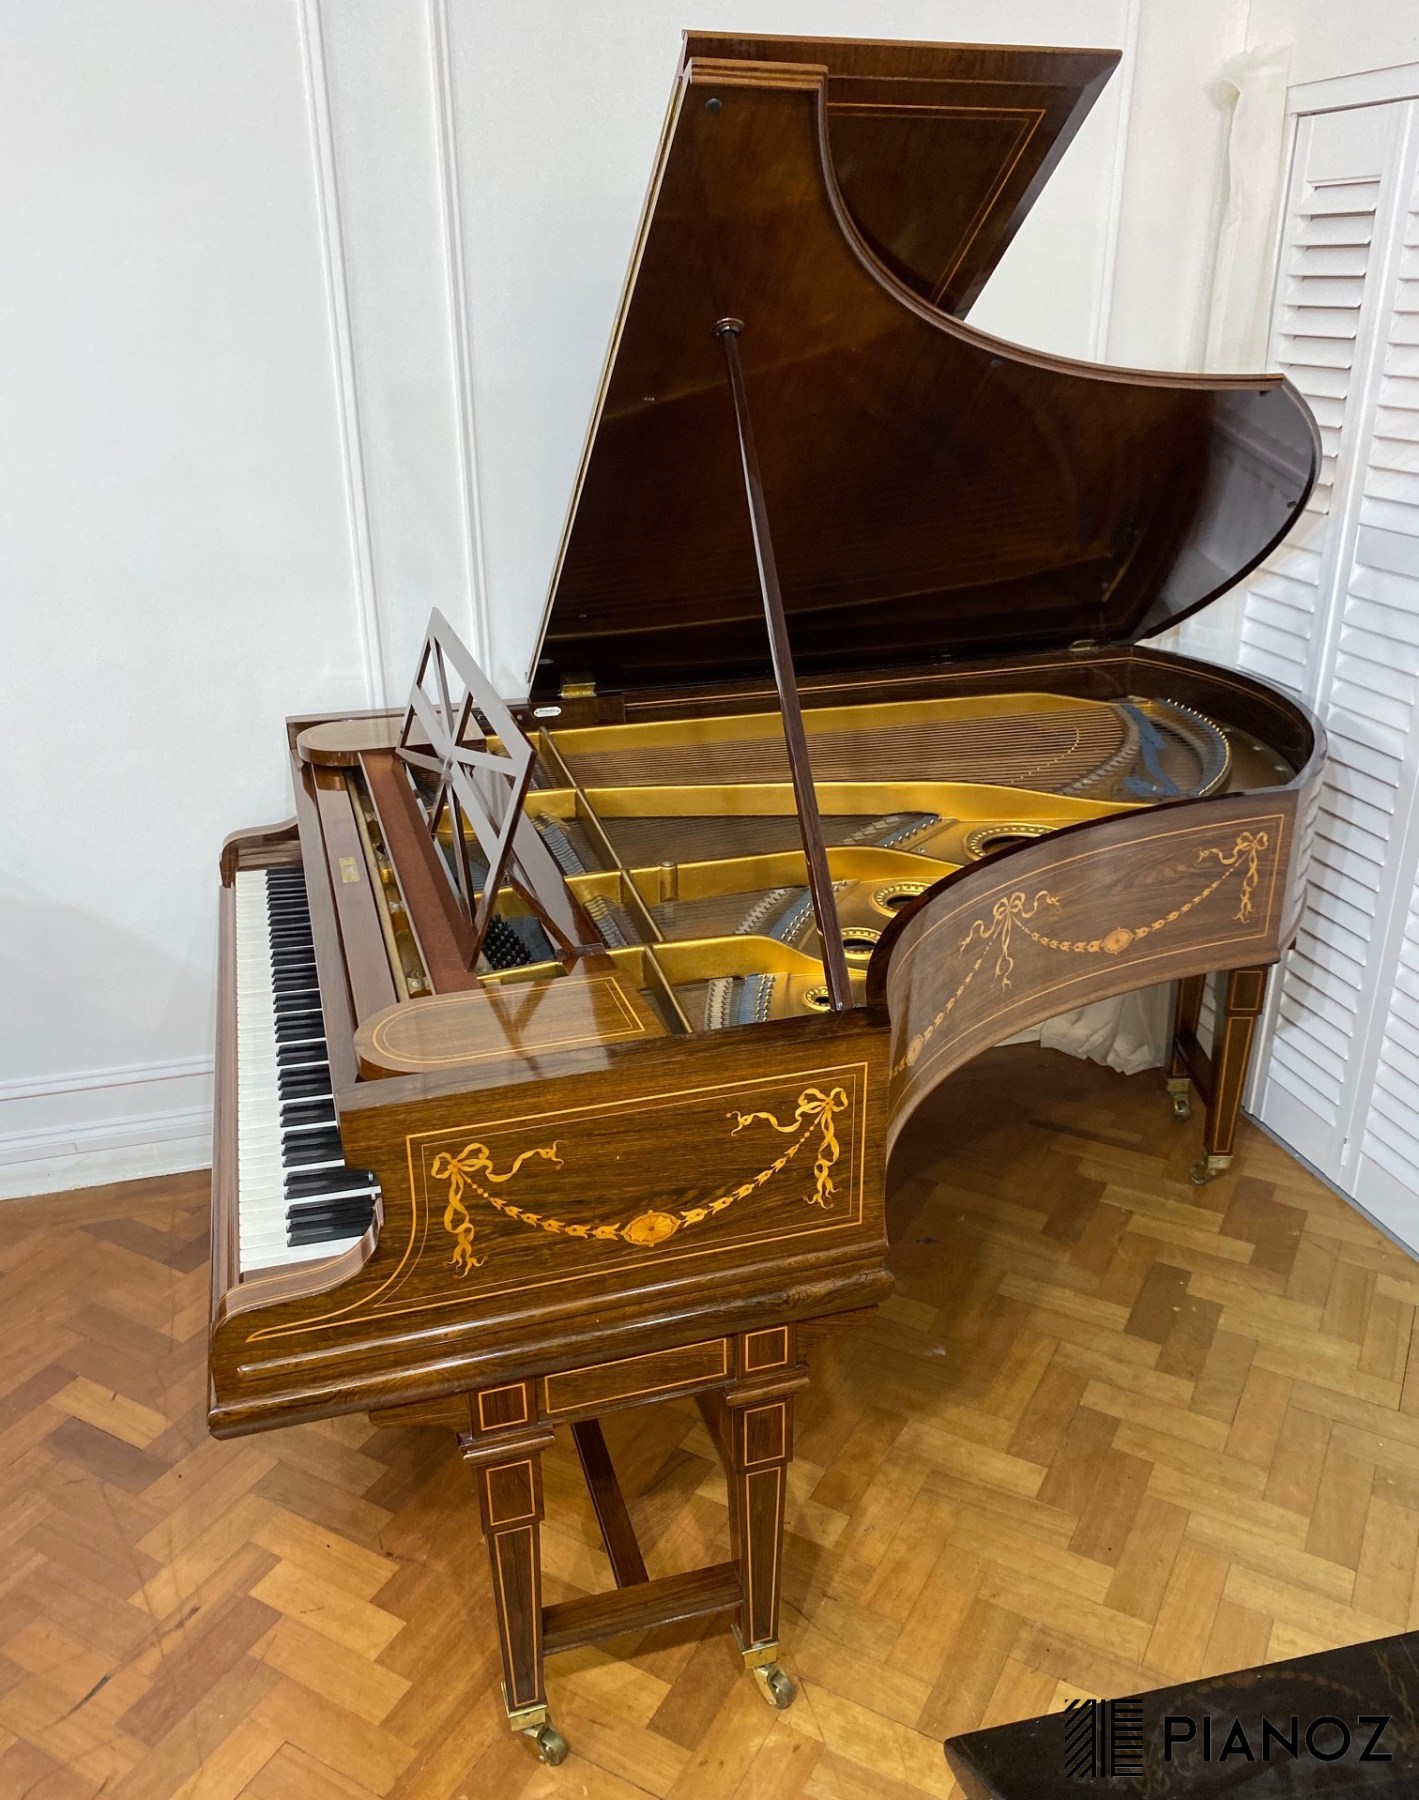 C. Bechstein Sheraton Art Case Grand Piano piano for sale in UK